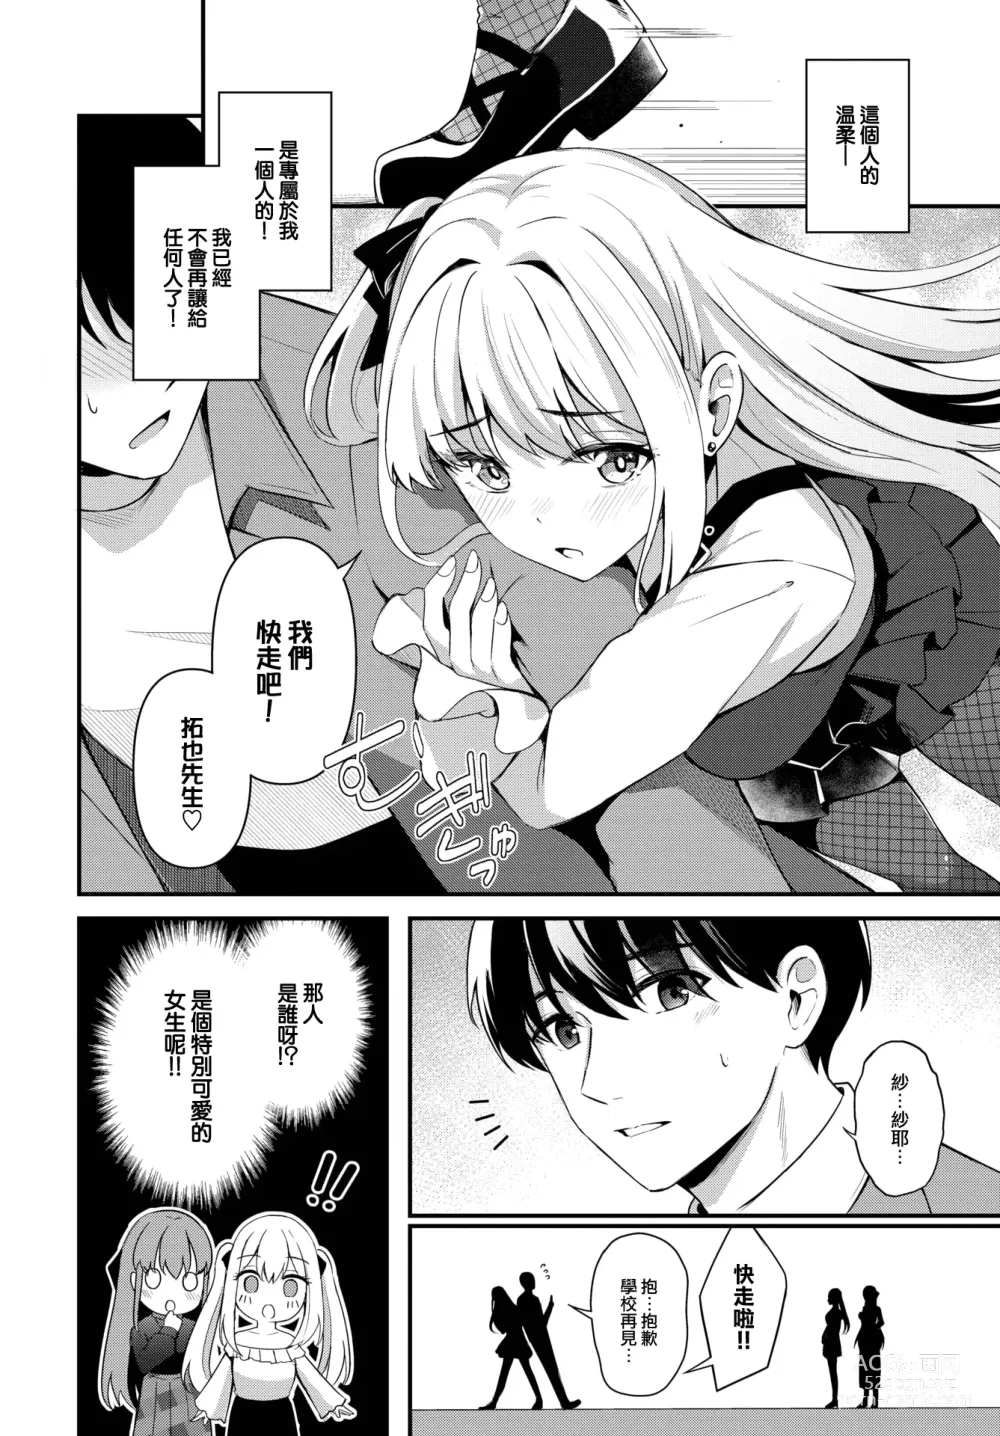 Page 3 of manga Joou no Shitsuke - Queens discipline ~after~